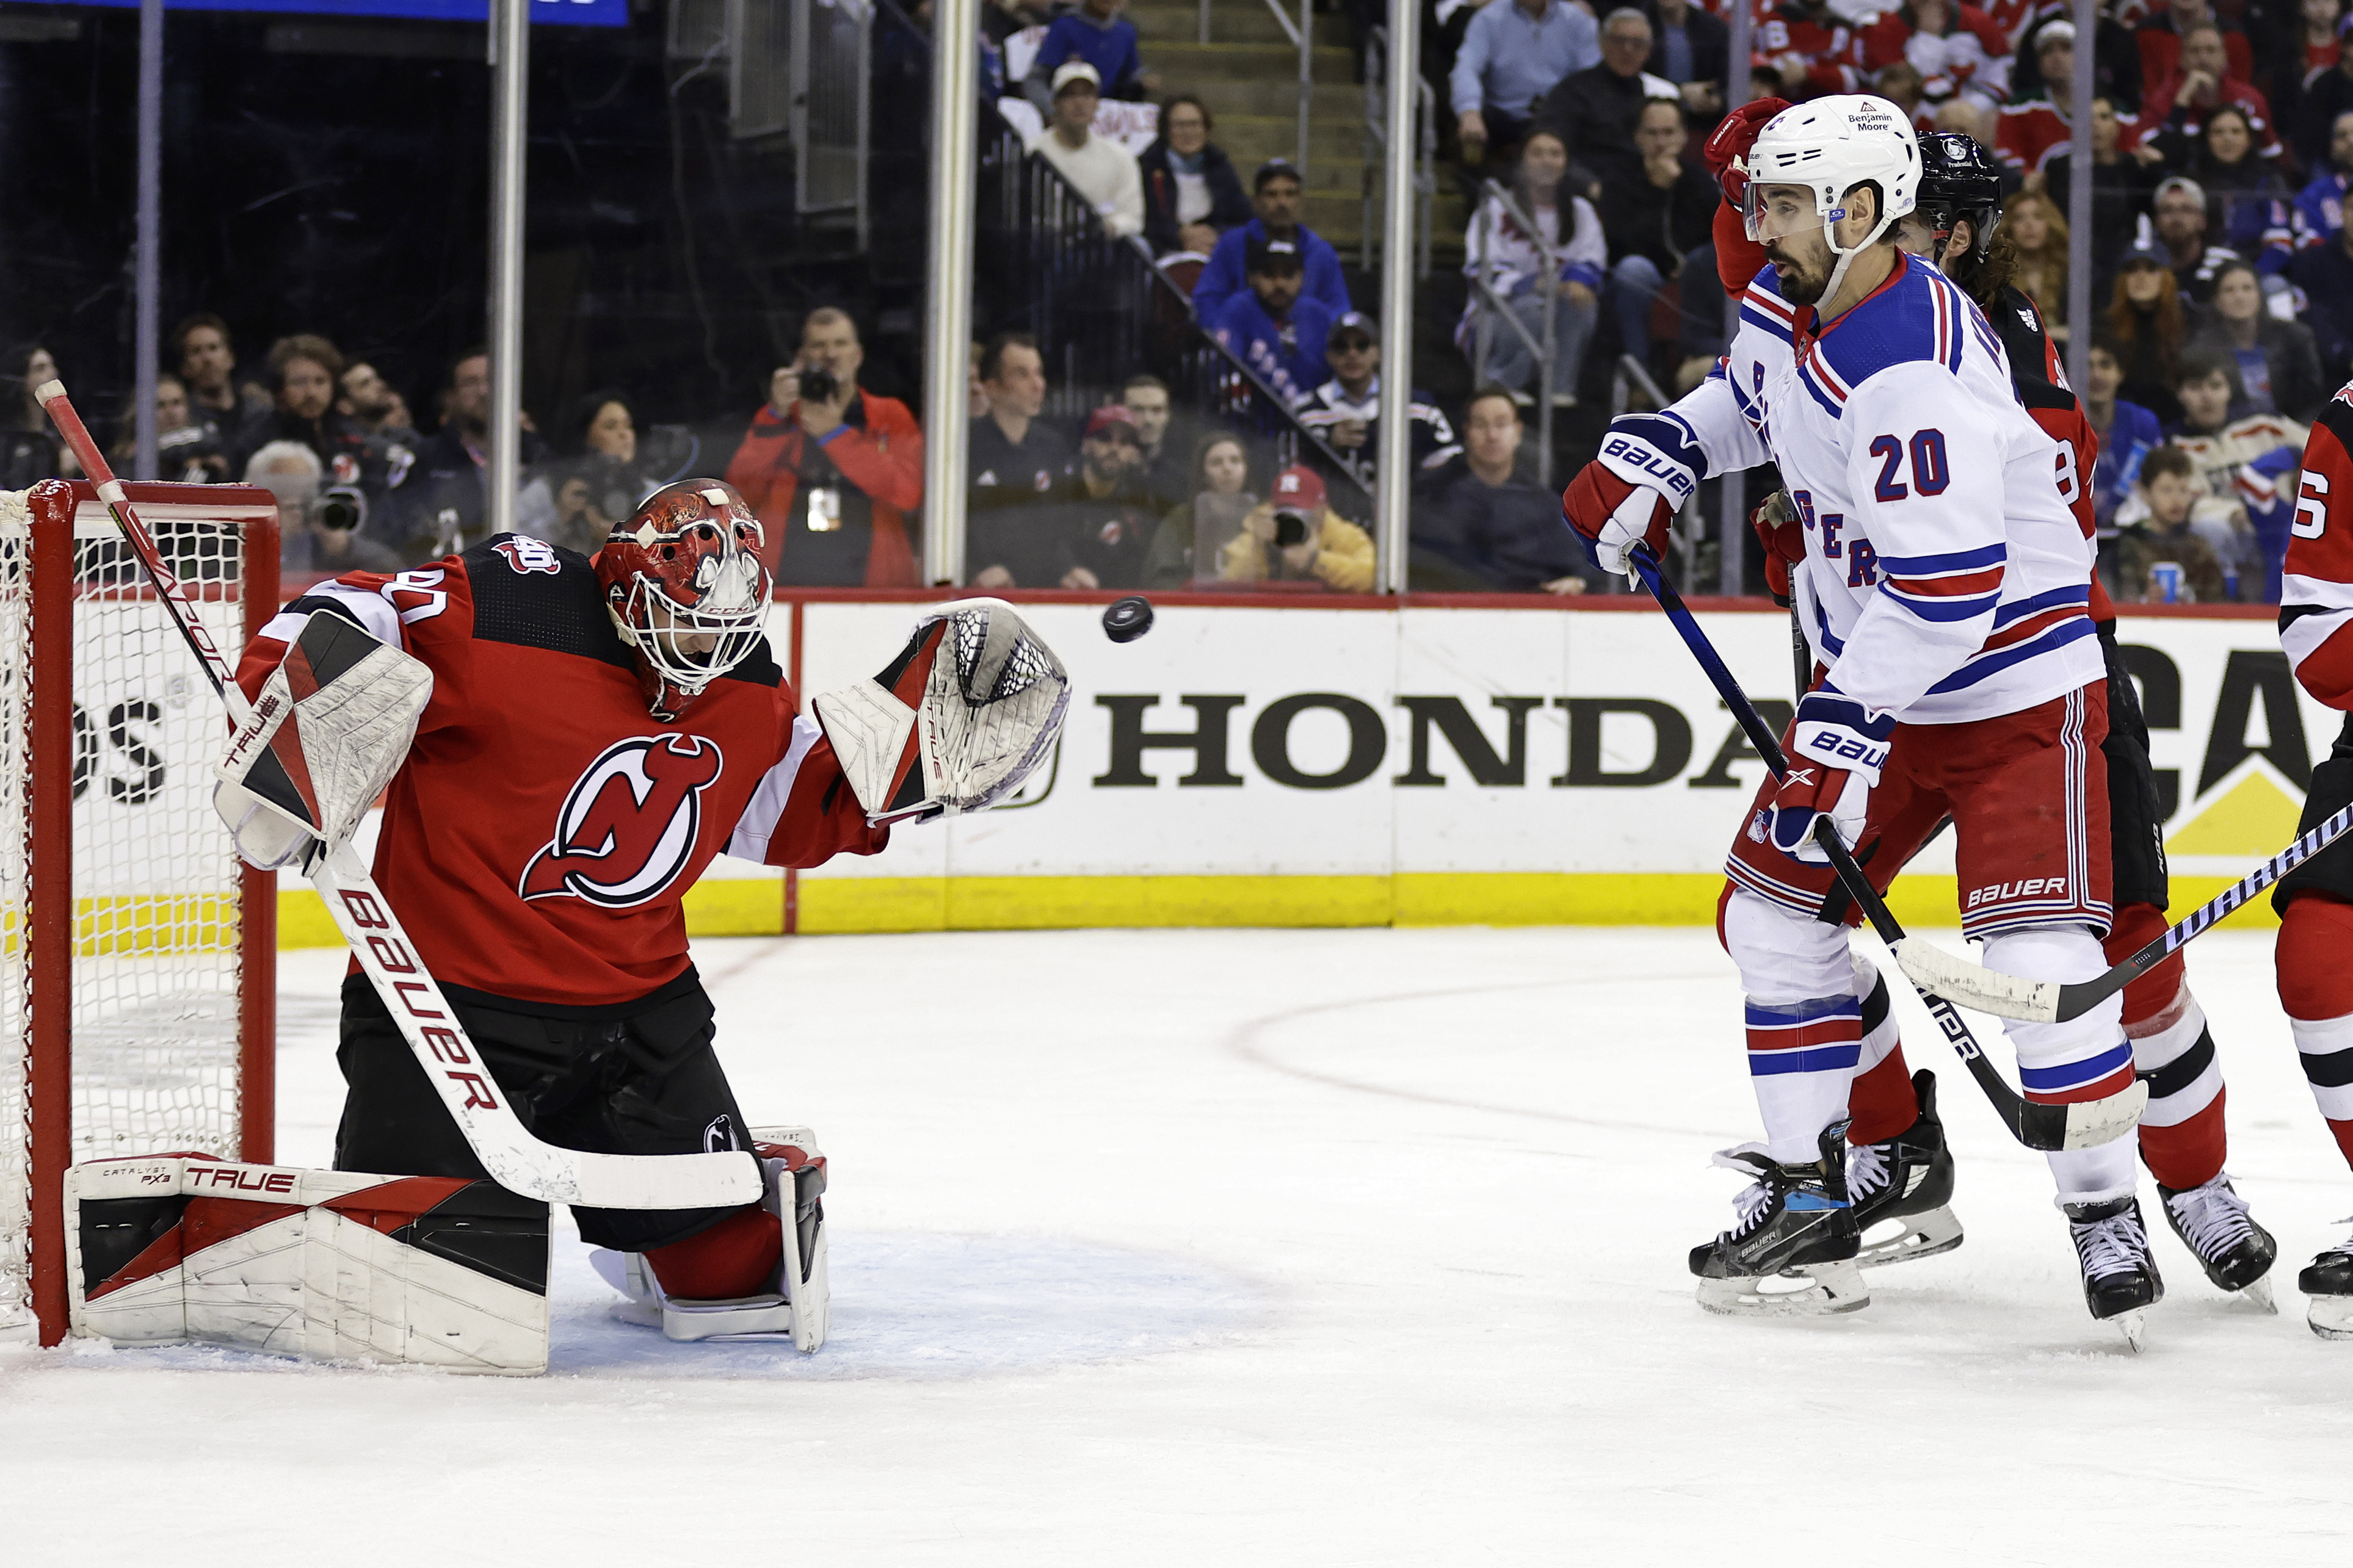 Devils vs. Rangers Game 7 final score: Akira Schmid's shutout